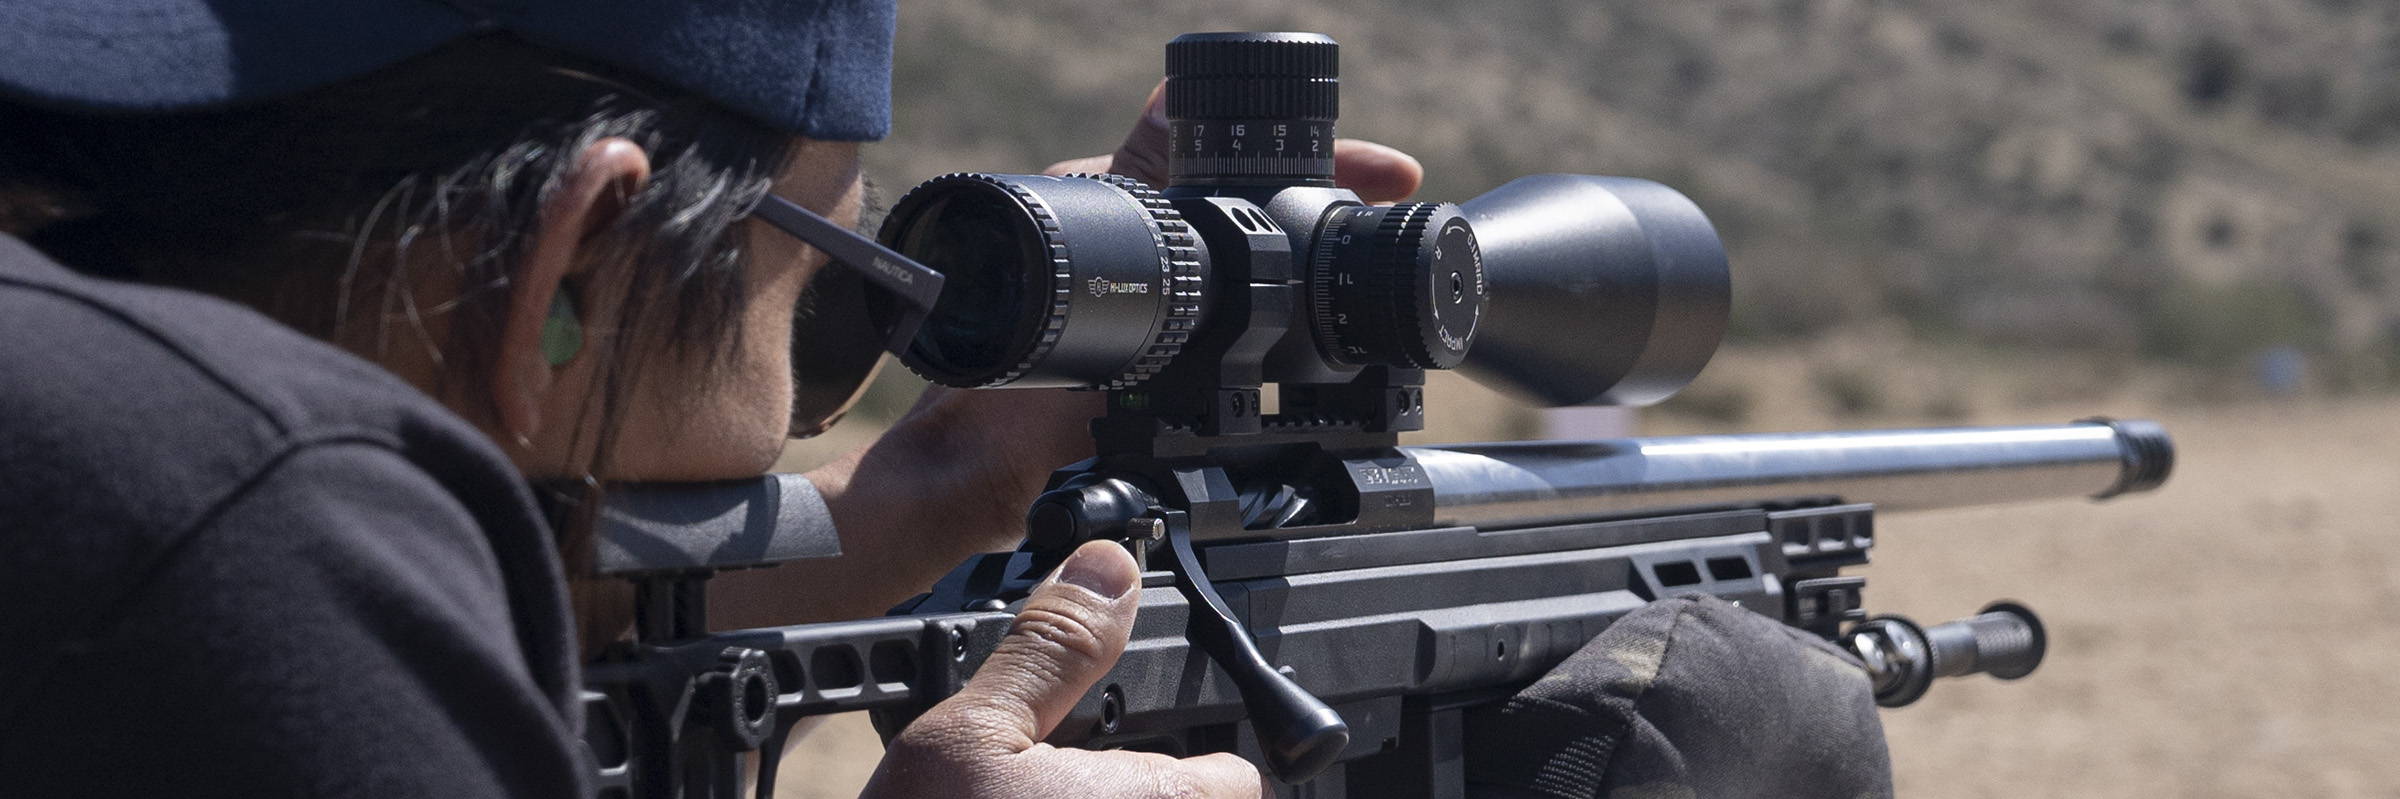 hi-lux optics pr5 5-25x56 rifle scope34mm